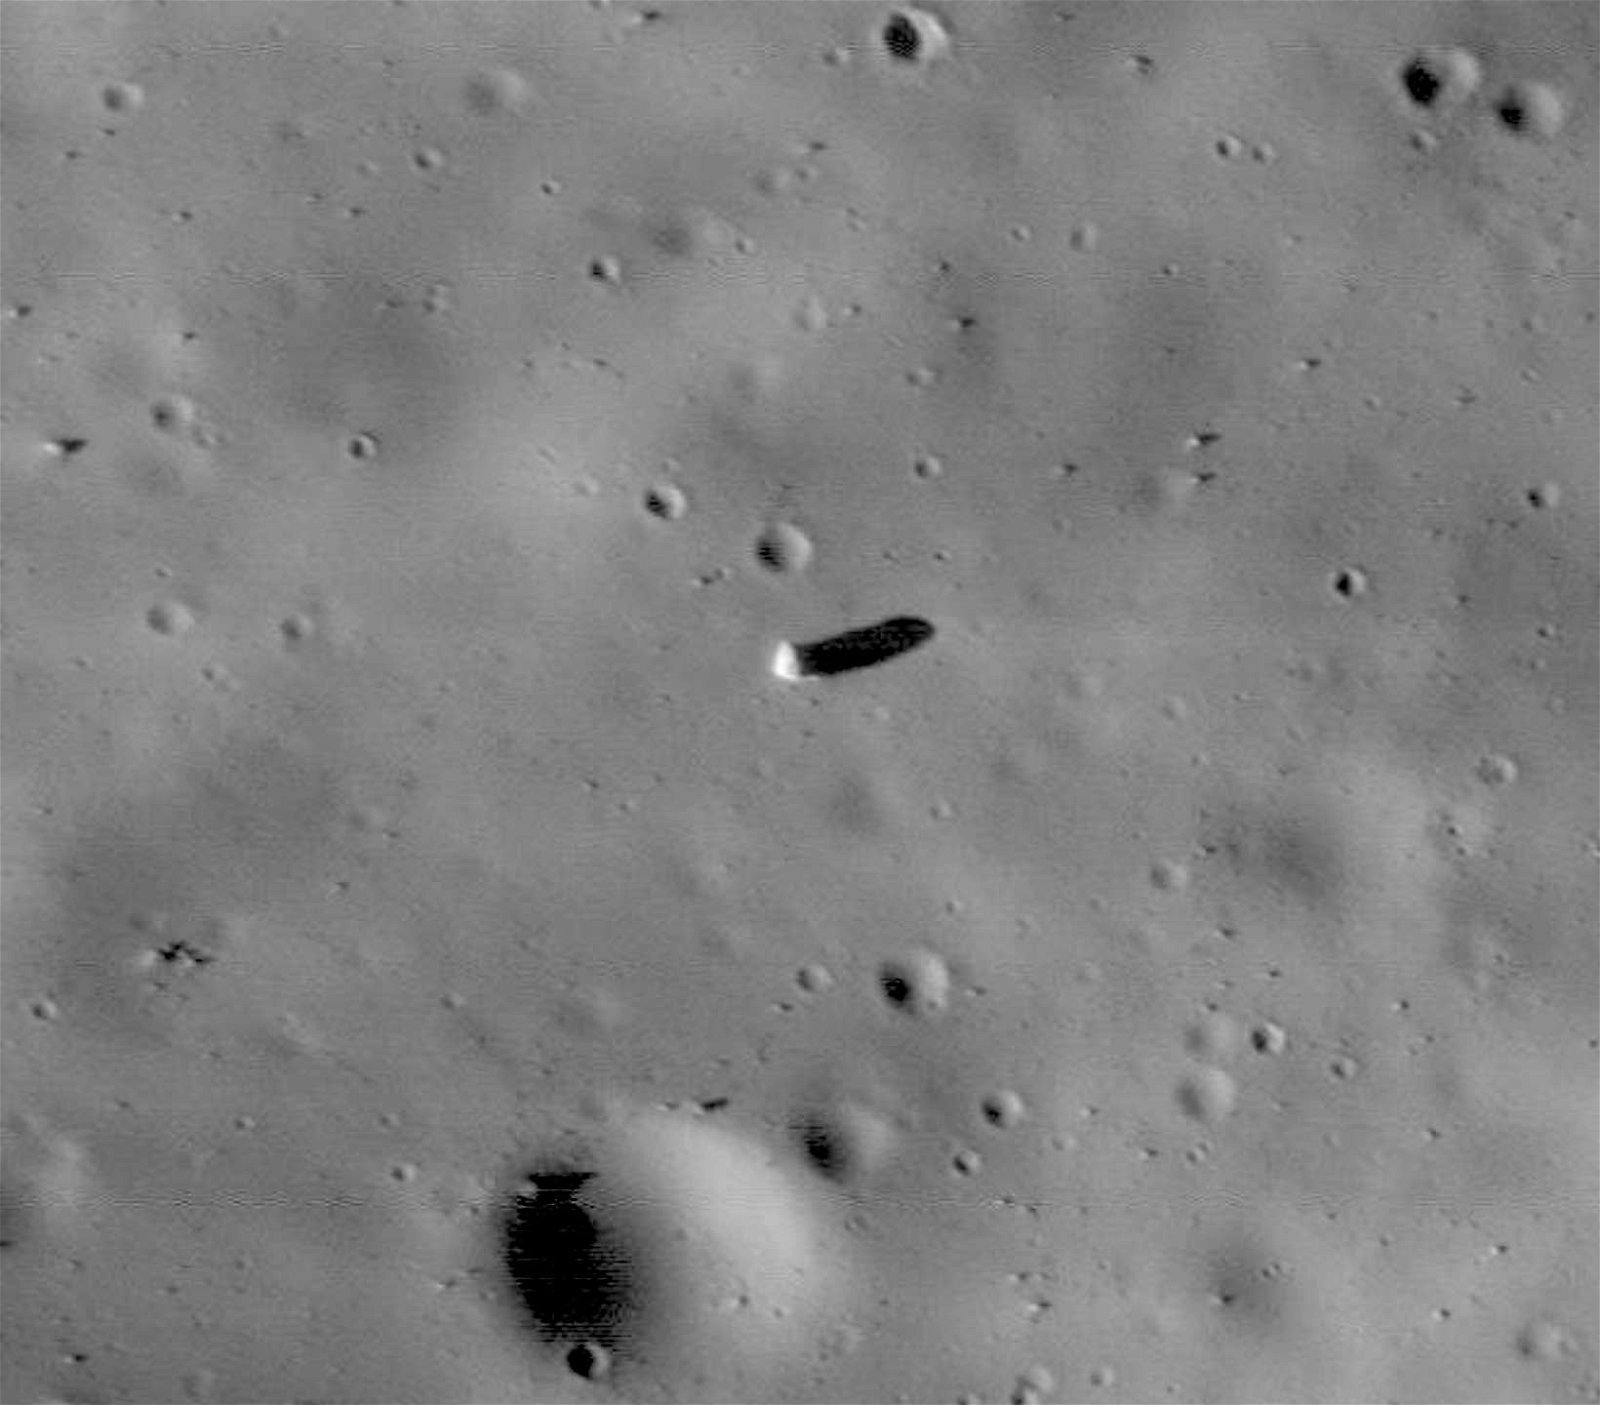 Phobos monolith